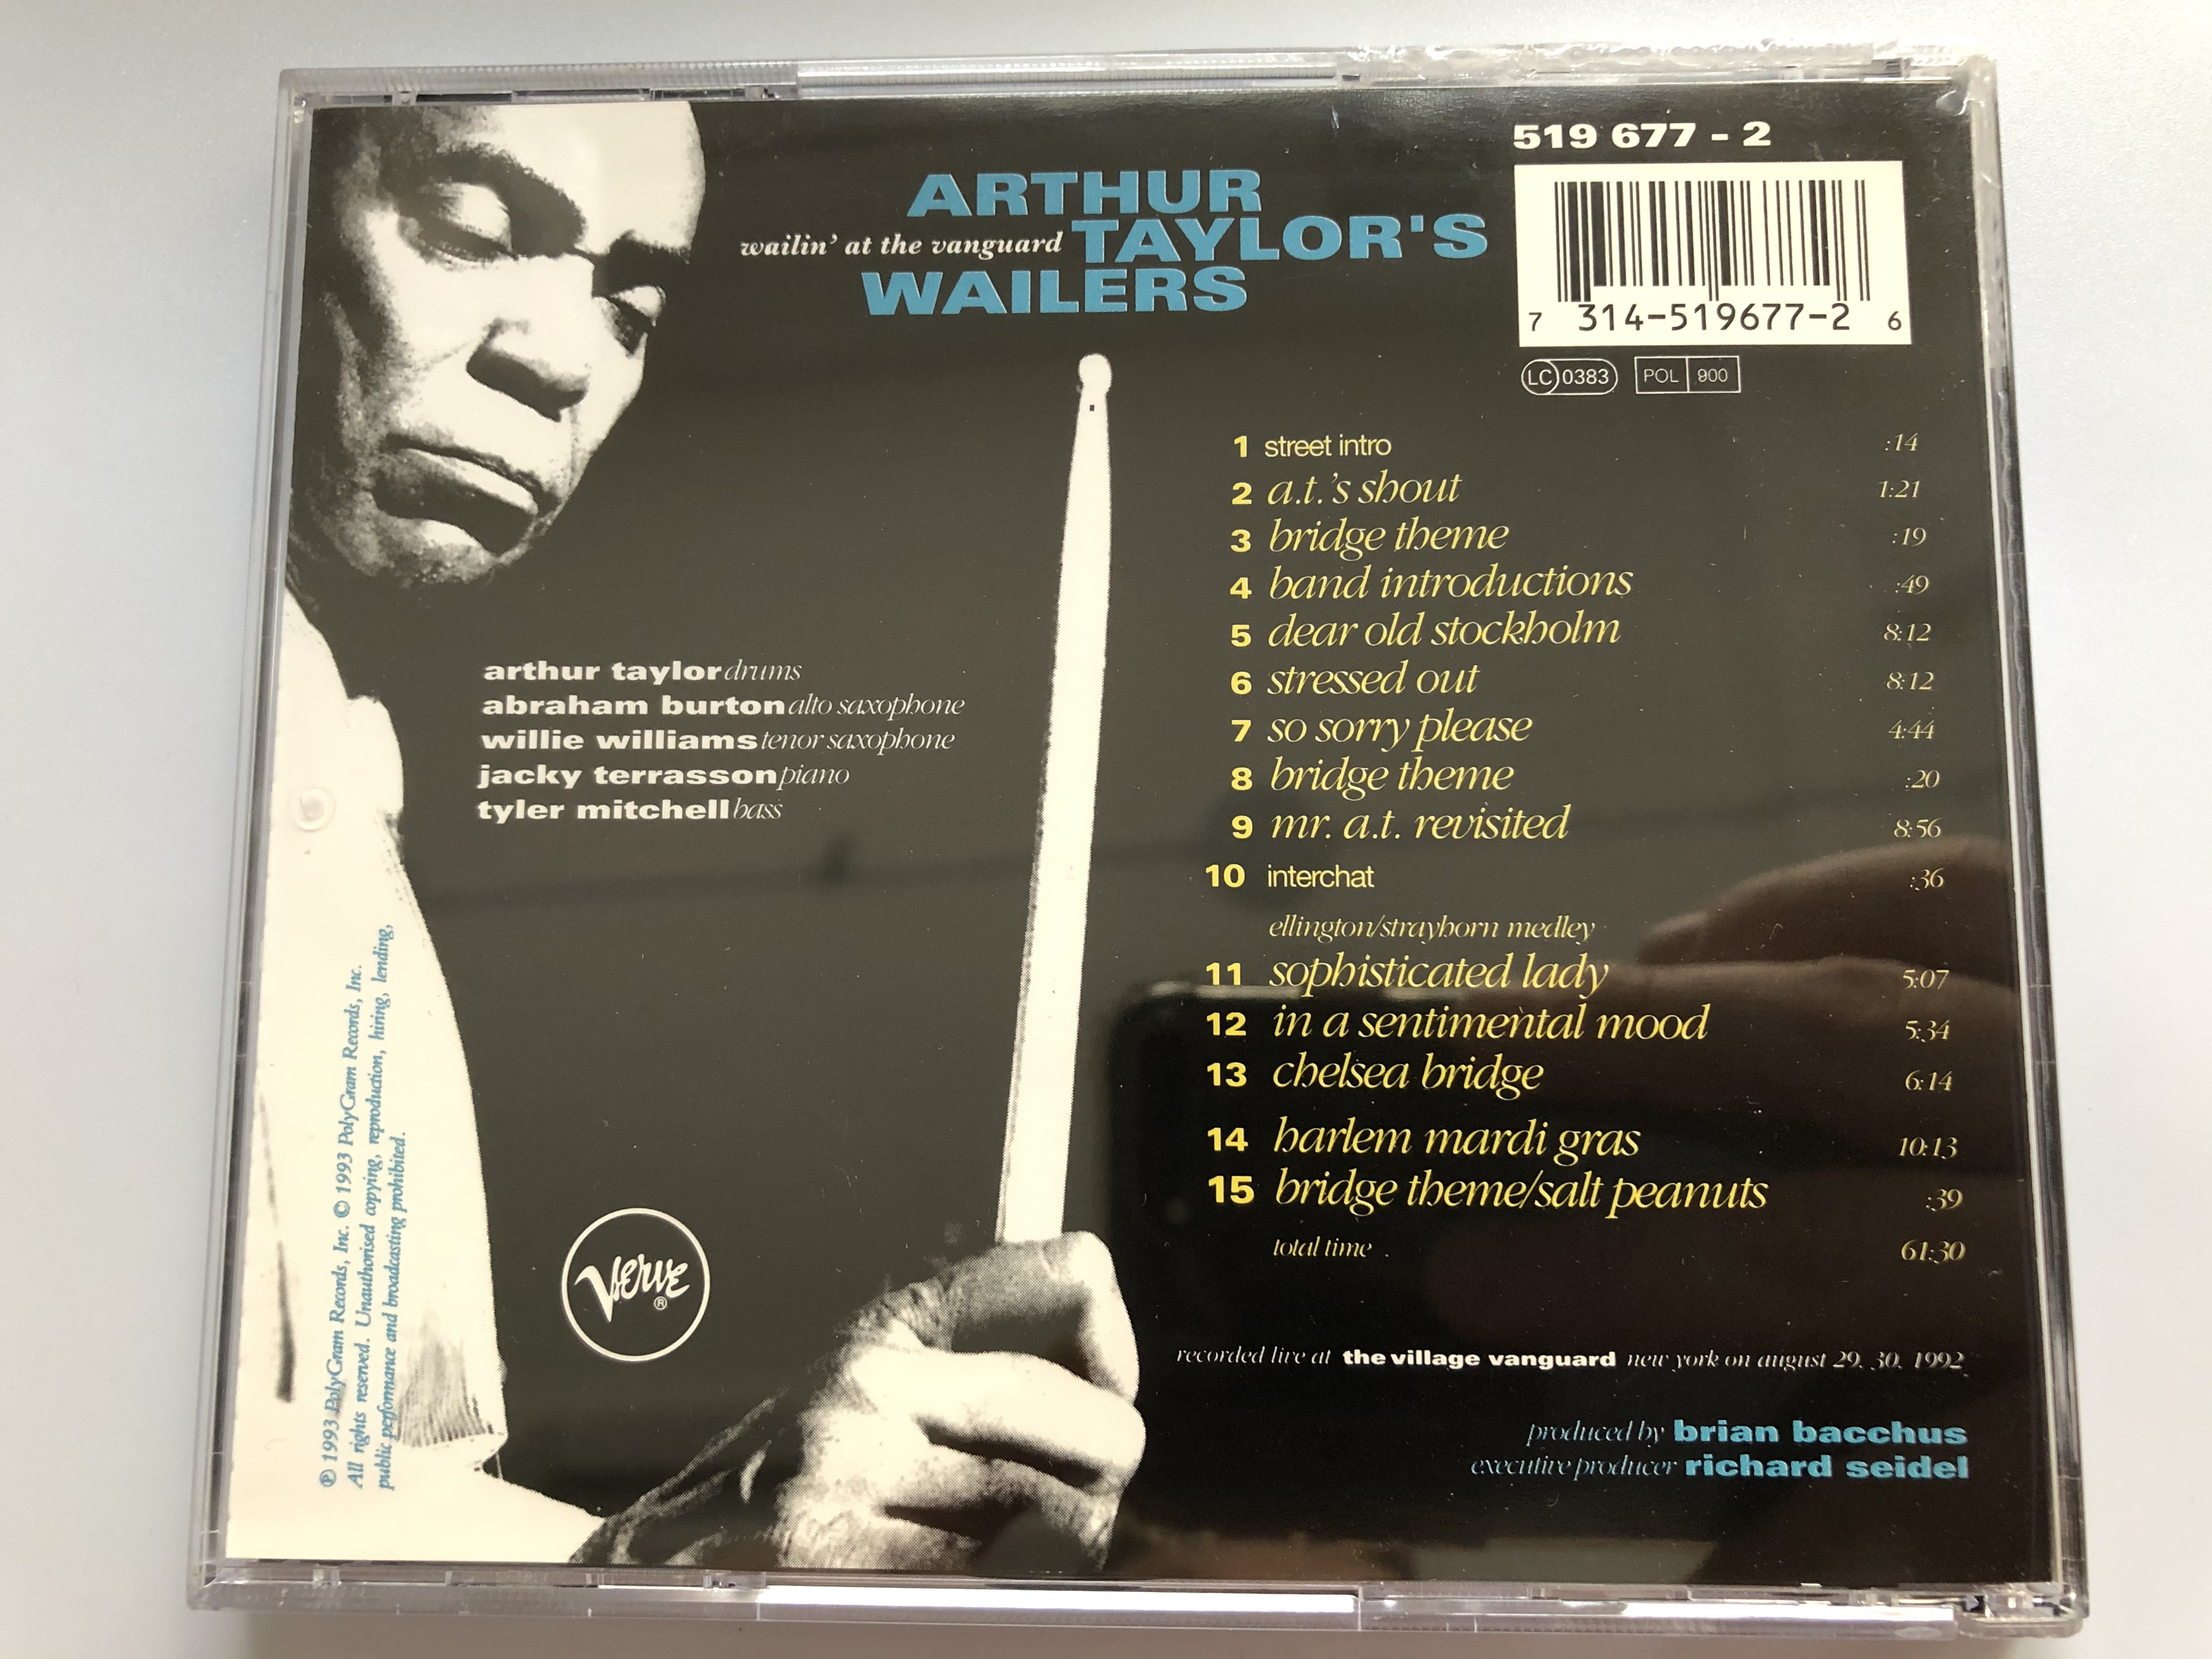 arthur-taylor-s-wailers-wailin-at-the-vanguard-verve-records-audio-cd-1993-519-677-2-7-.jpg